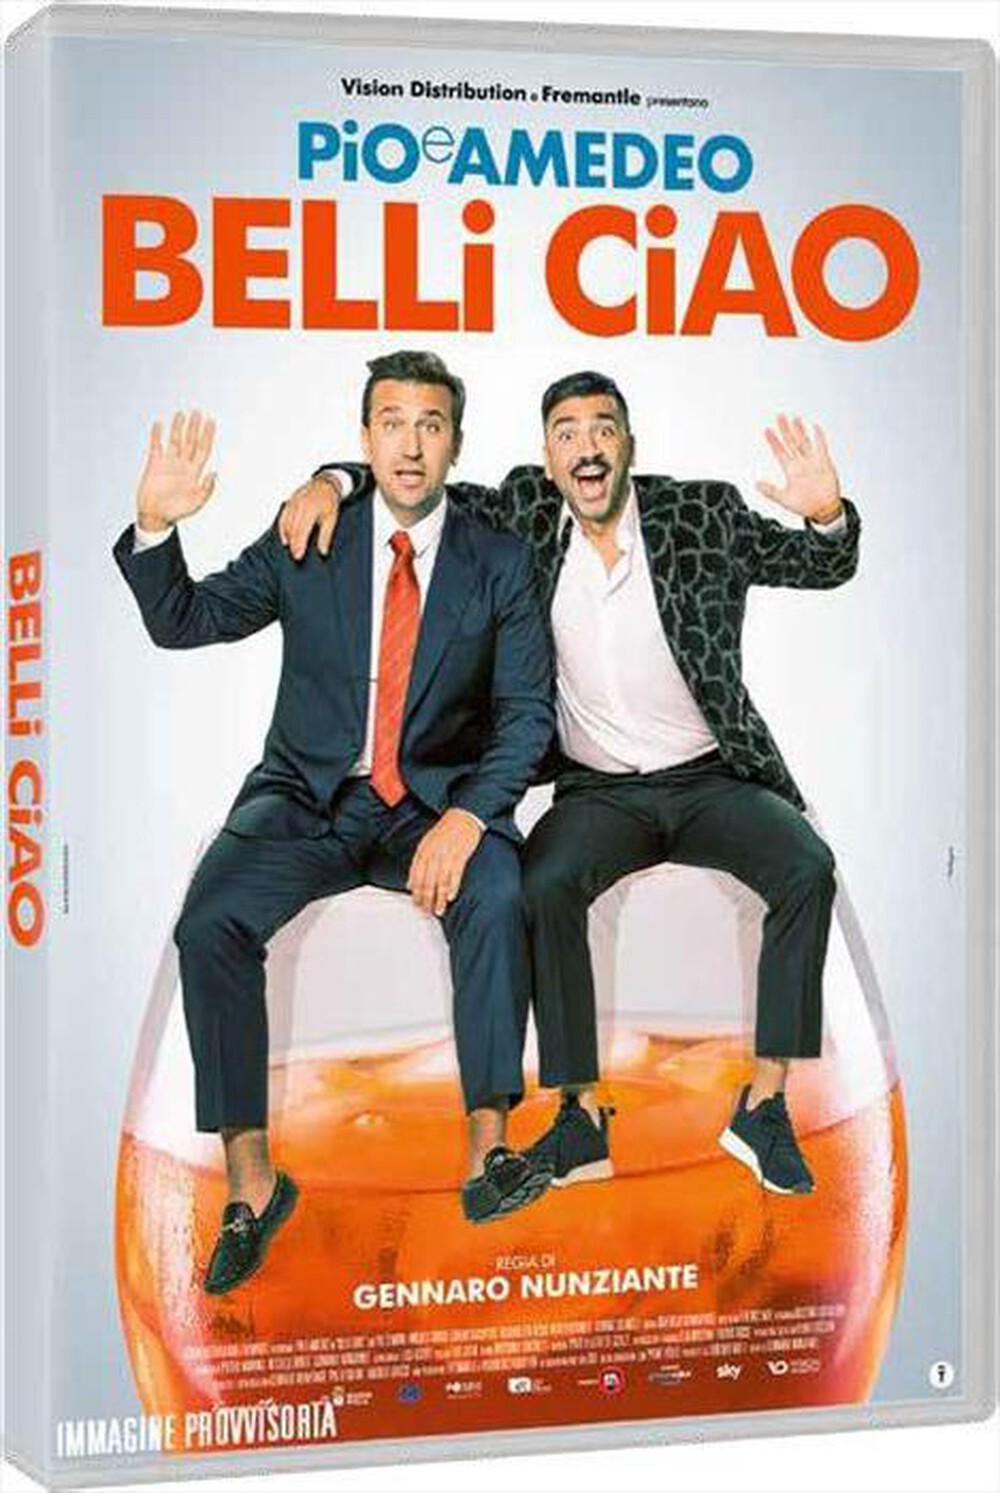 "Vision Distribution - Belli Ciao"